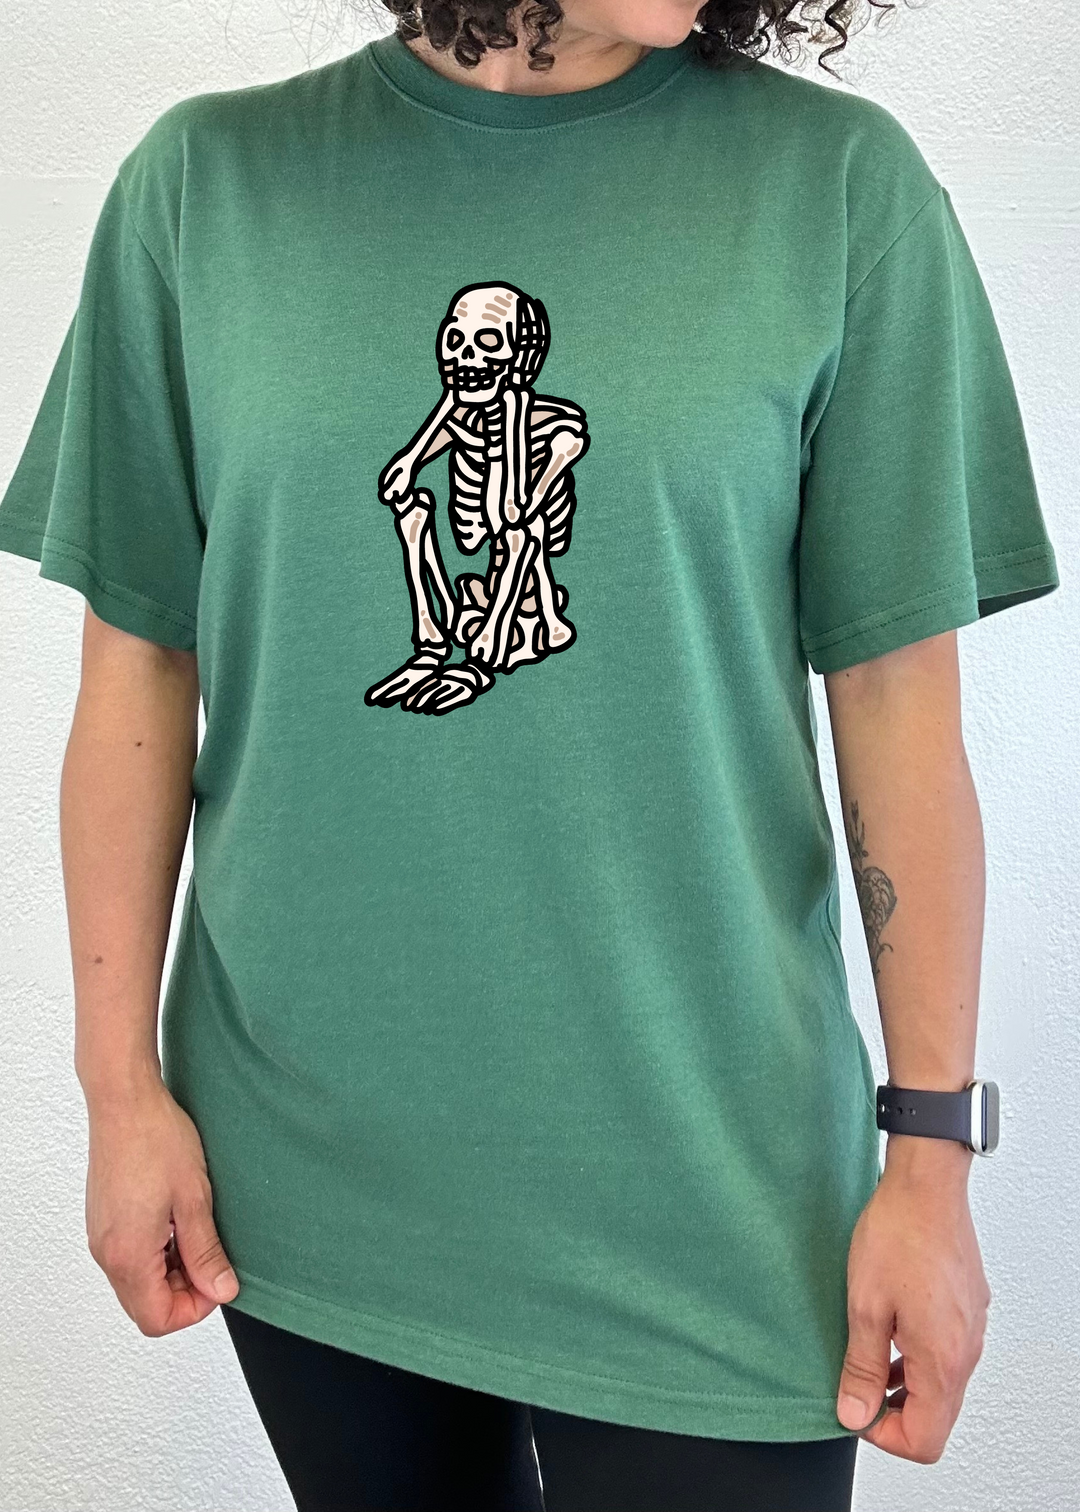 Sad Skeleton Halloween Unisex Graphic Bamboo T-Shirt teal